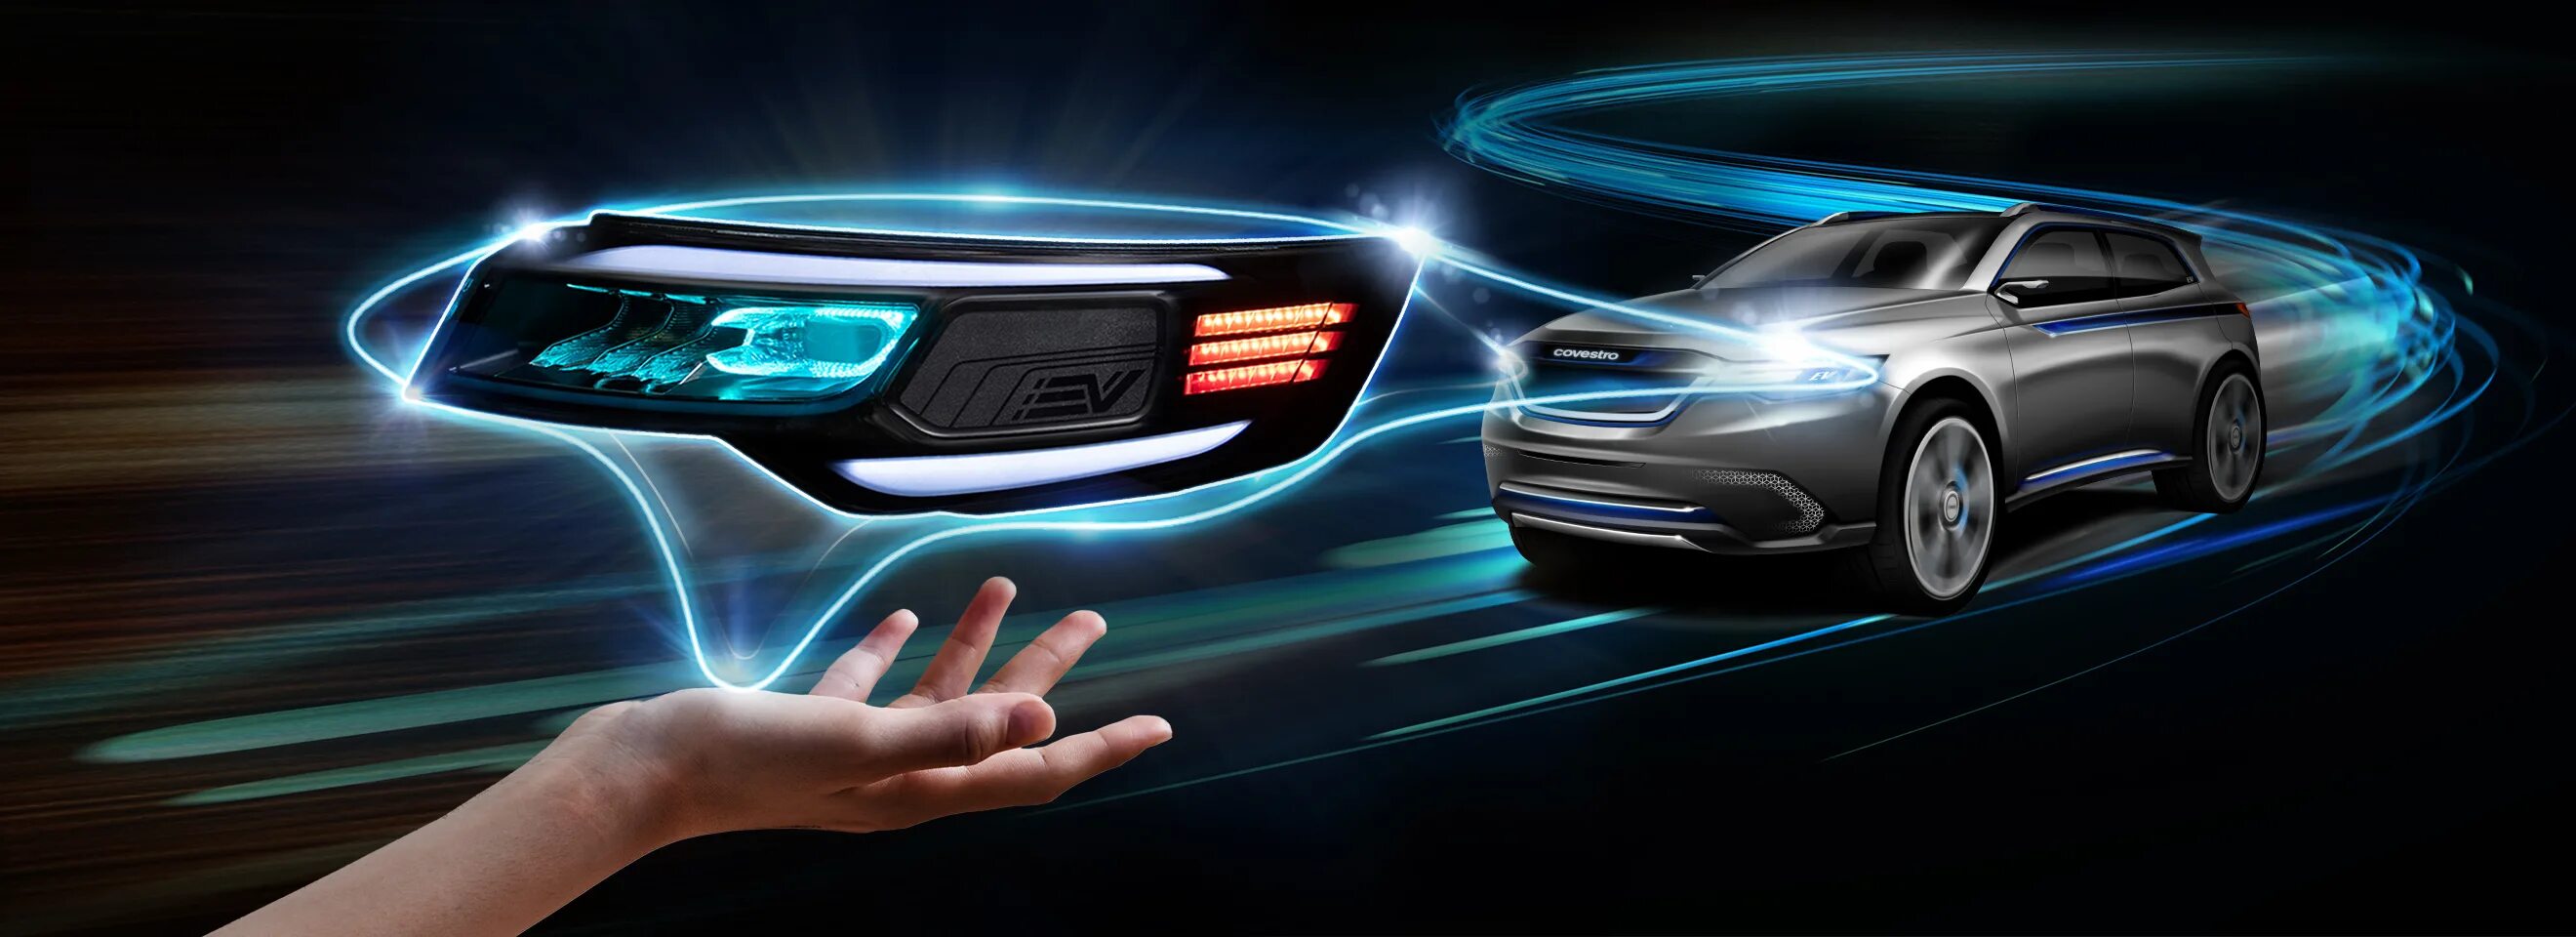 Light avto. Car Headlight. Автомобильный свет логотип. Mercedes-Benz, фары, ночь. Headlights Design.